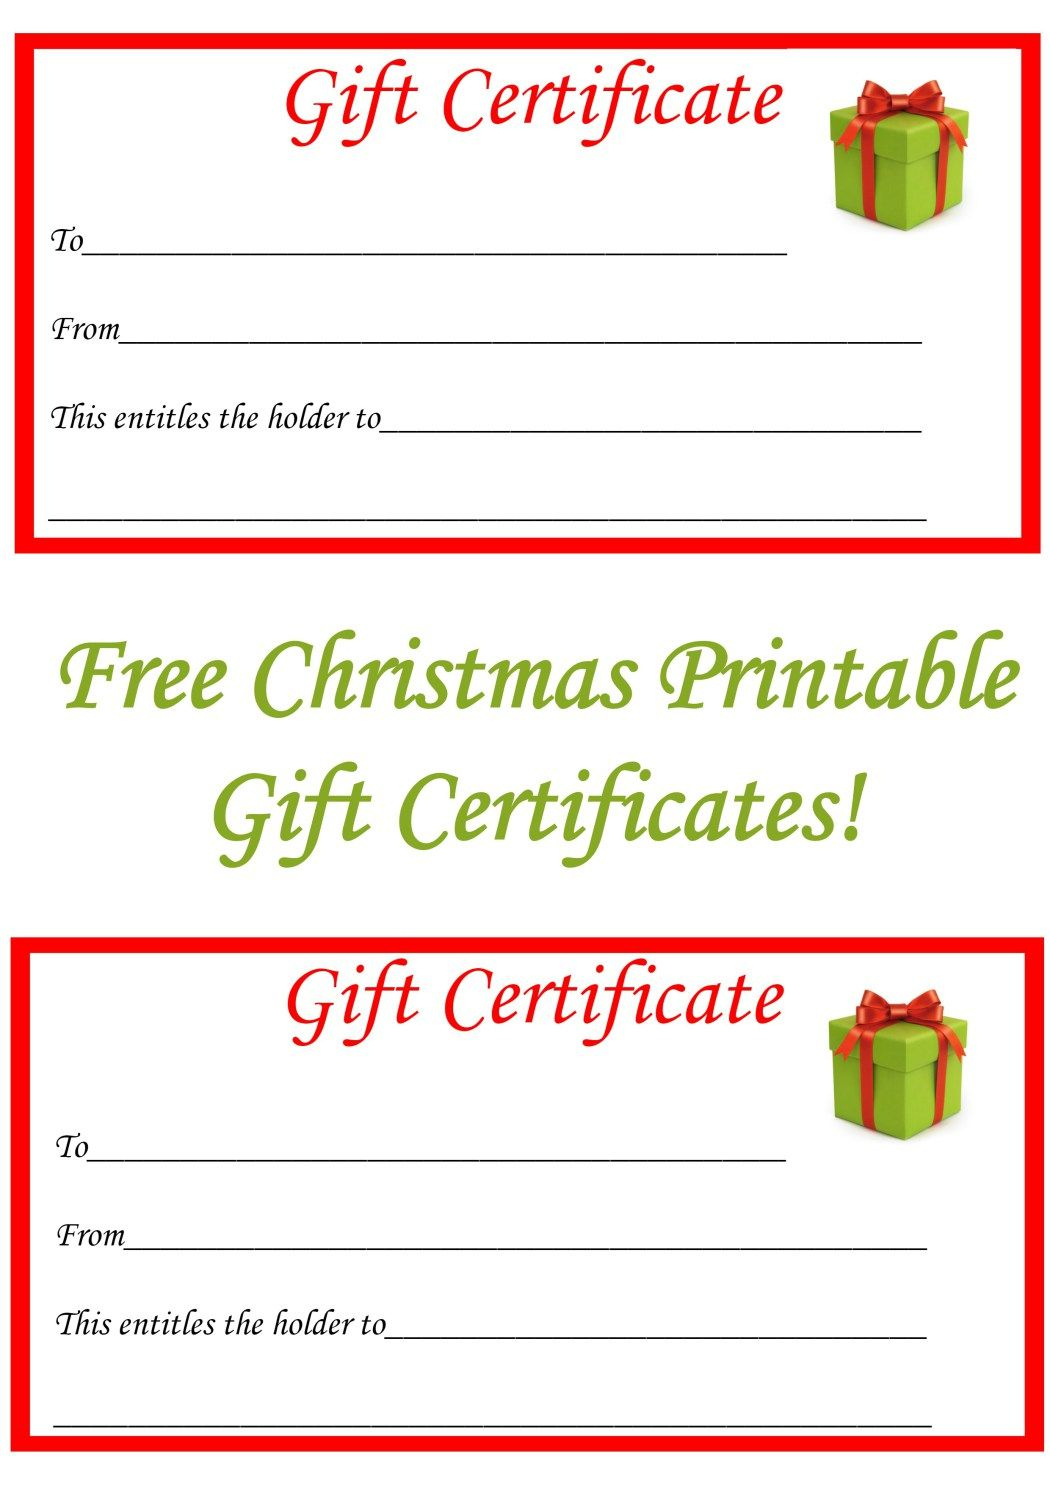 Free Christmas Printable Gift Certificates | Gift Ideas | Pinterest - Free Printable Xmas Gift Certificates